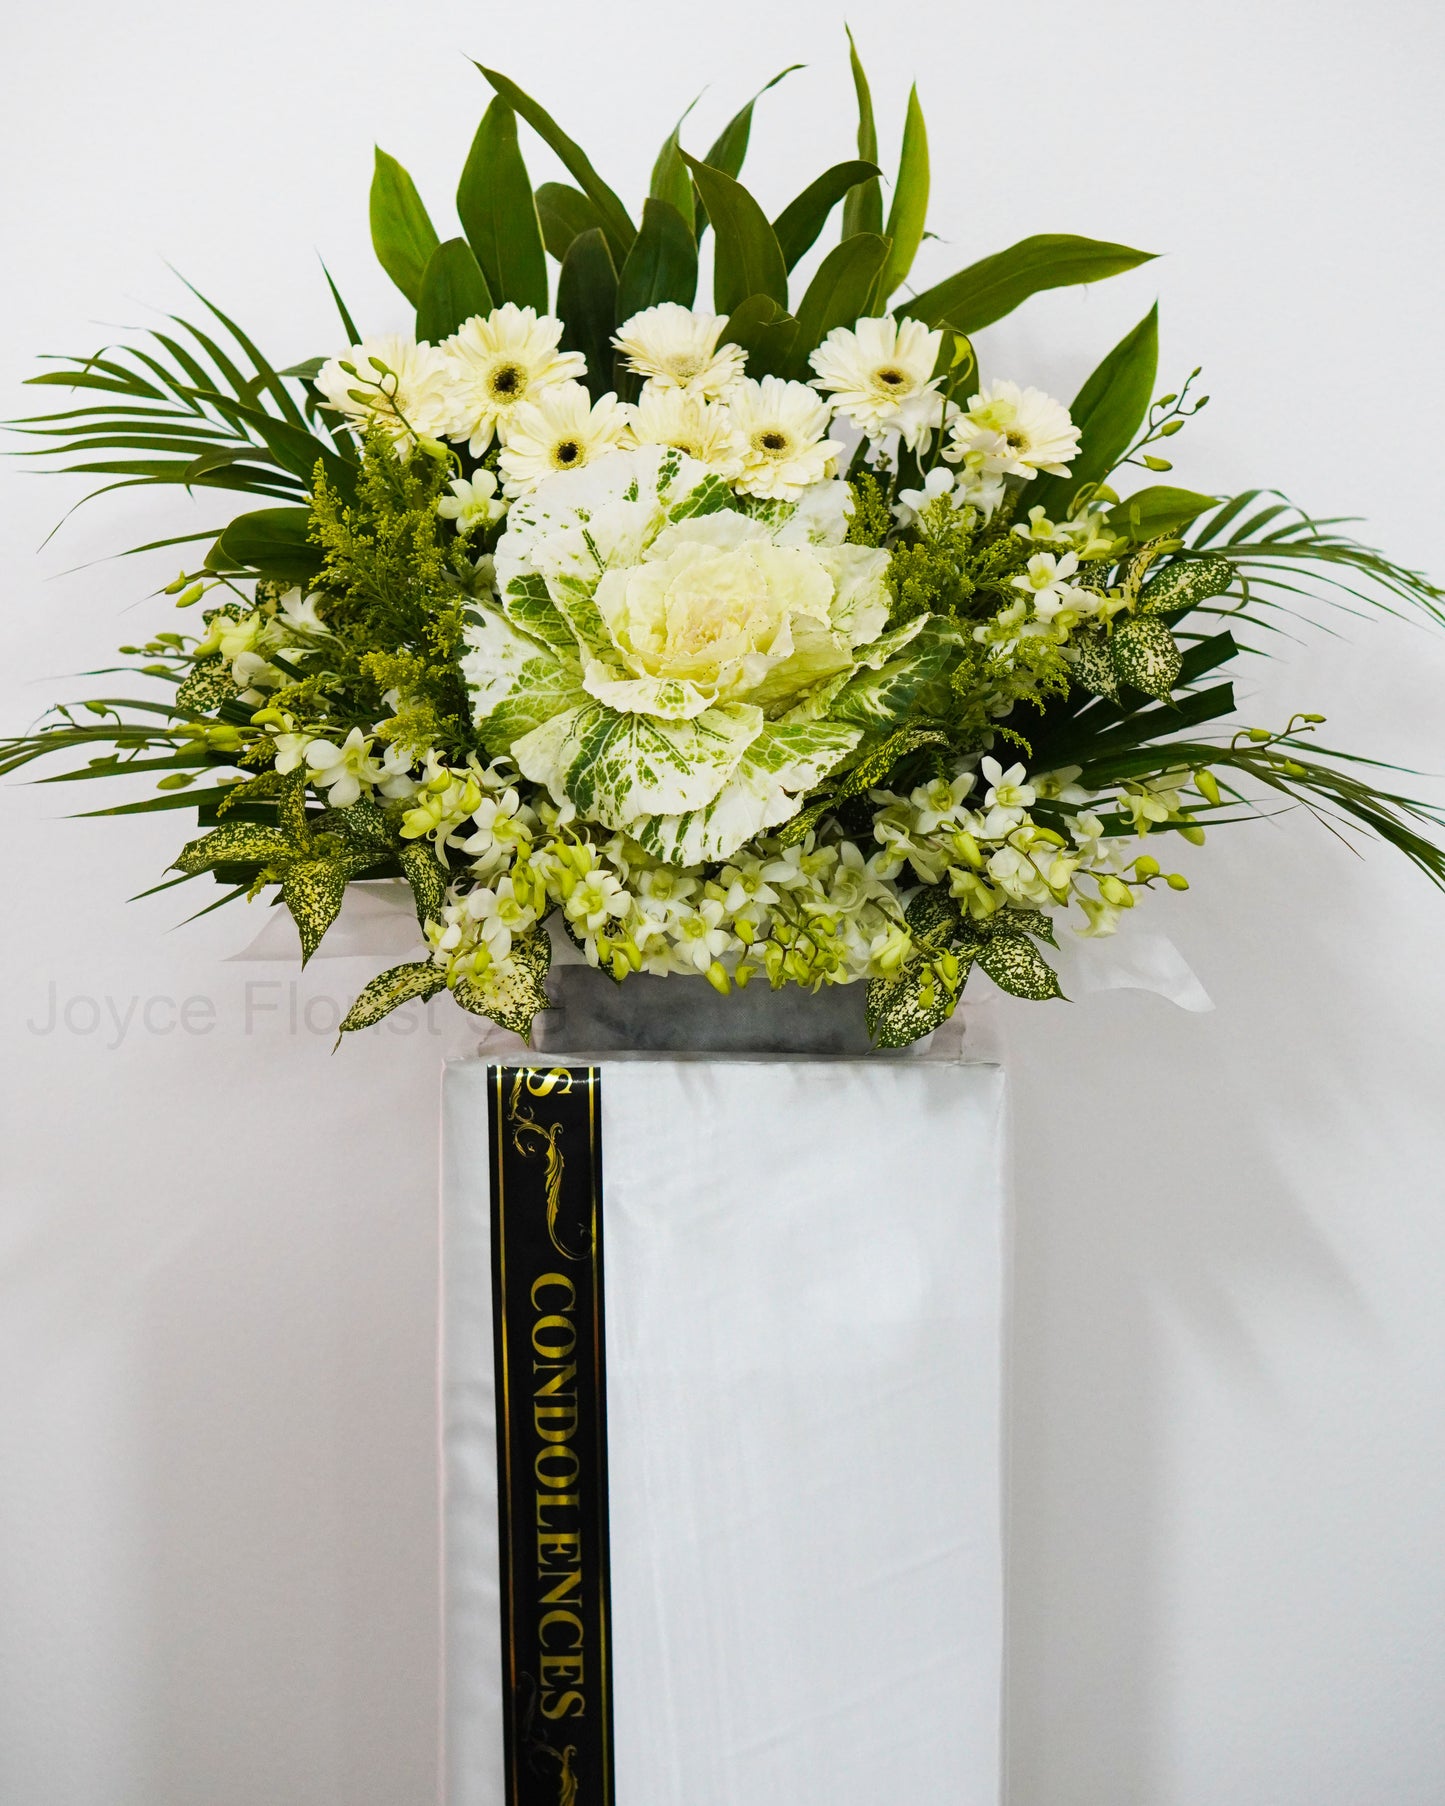 Condolence Flower Funeral Wreath - Wish